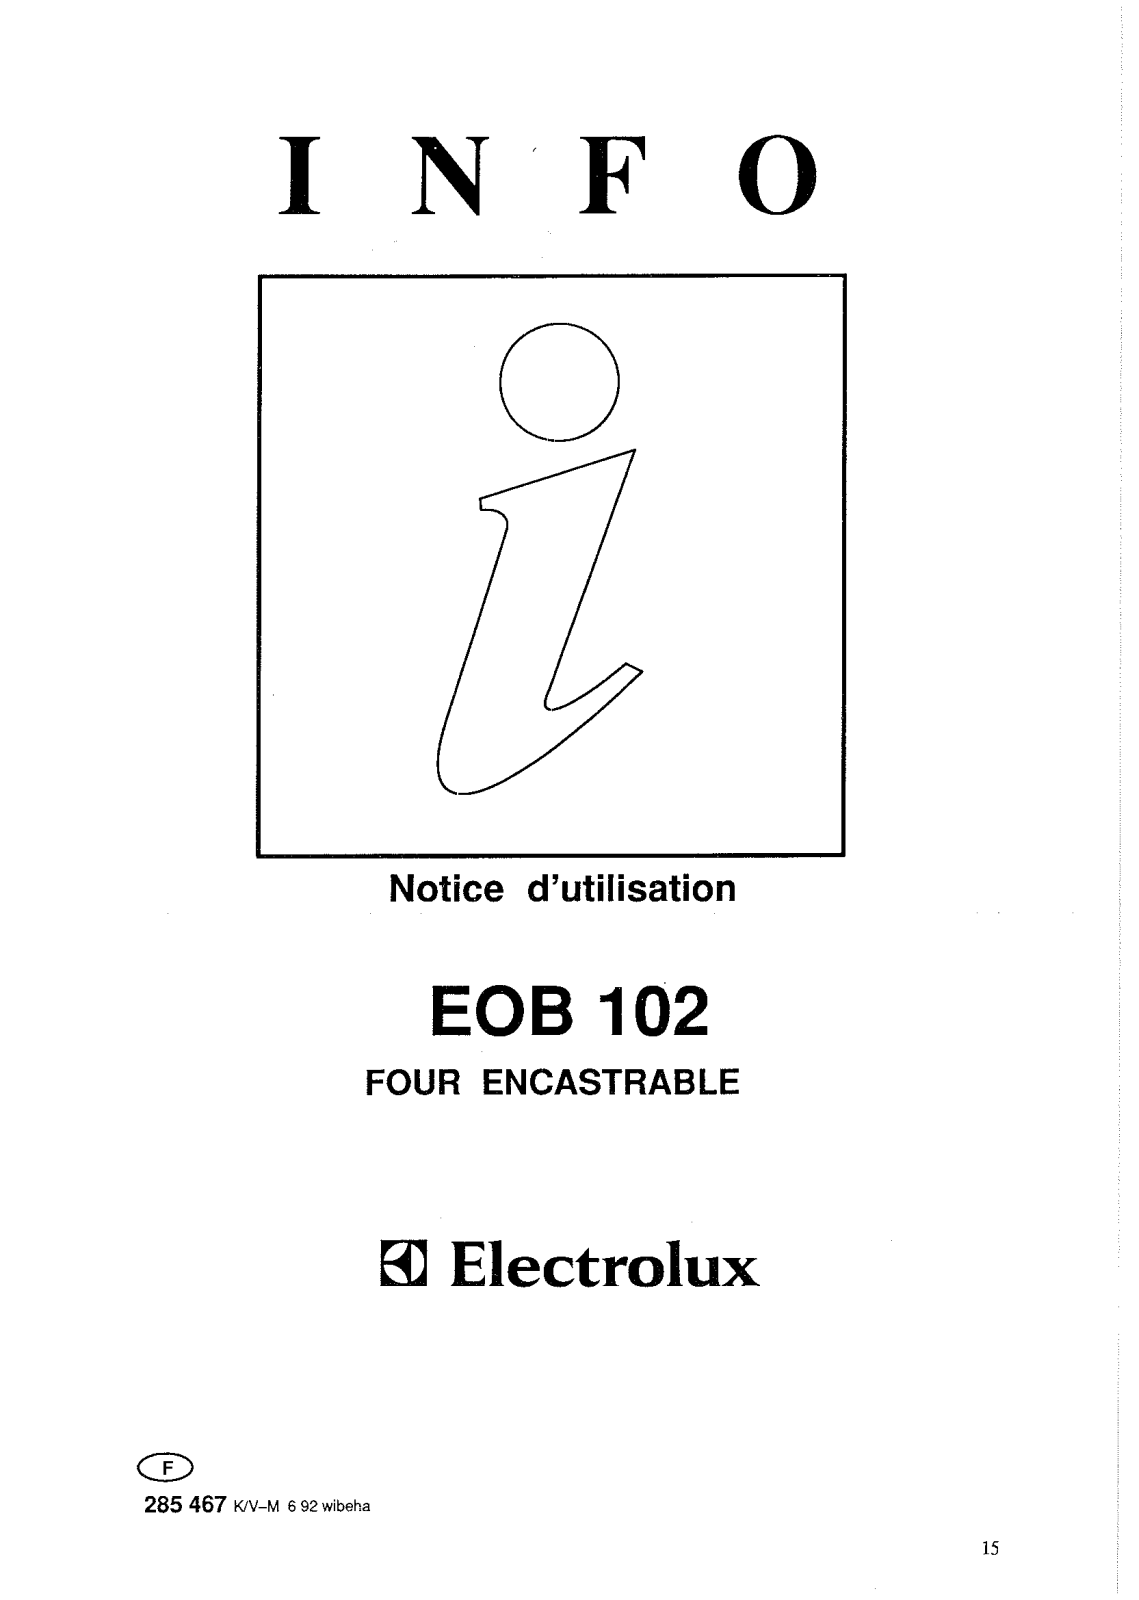 electrolux EOB102 User Manual